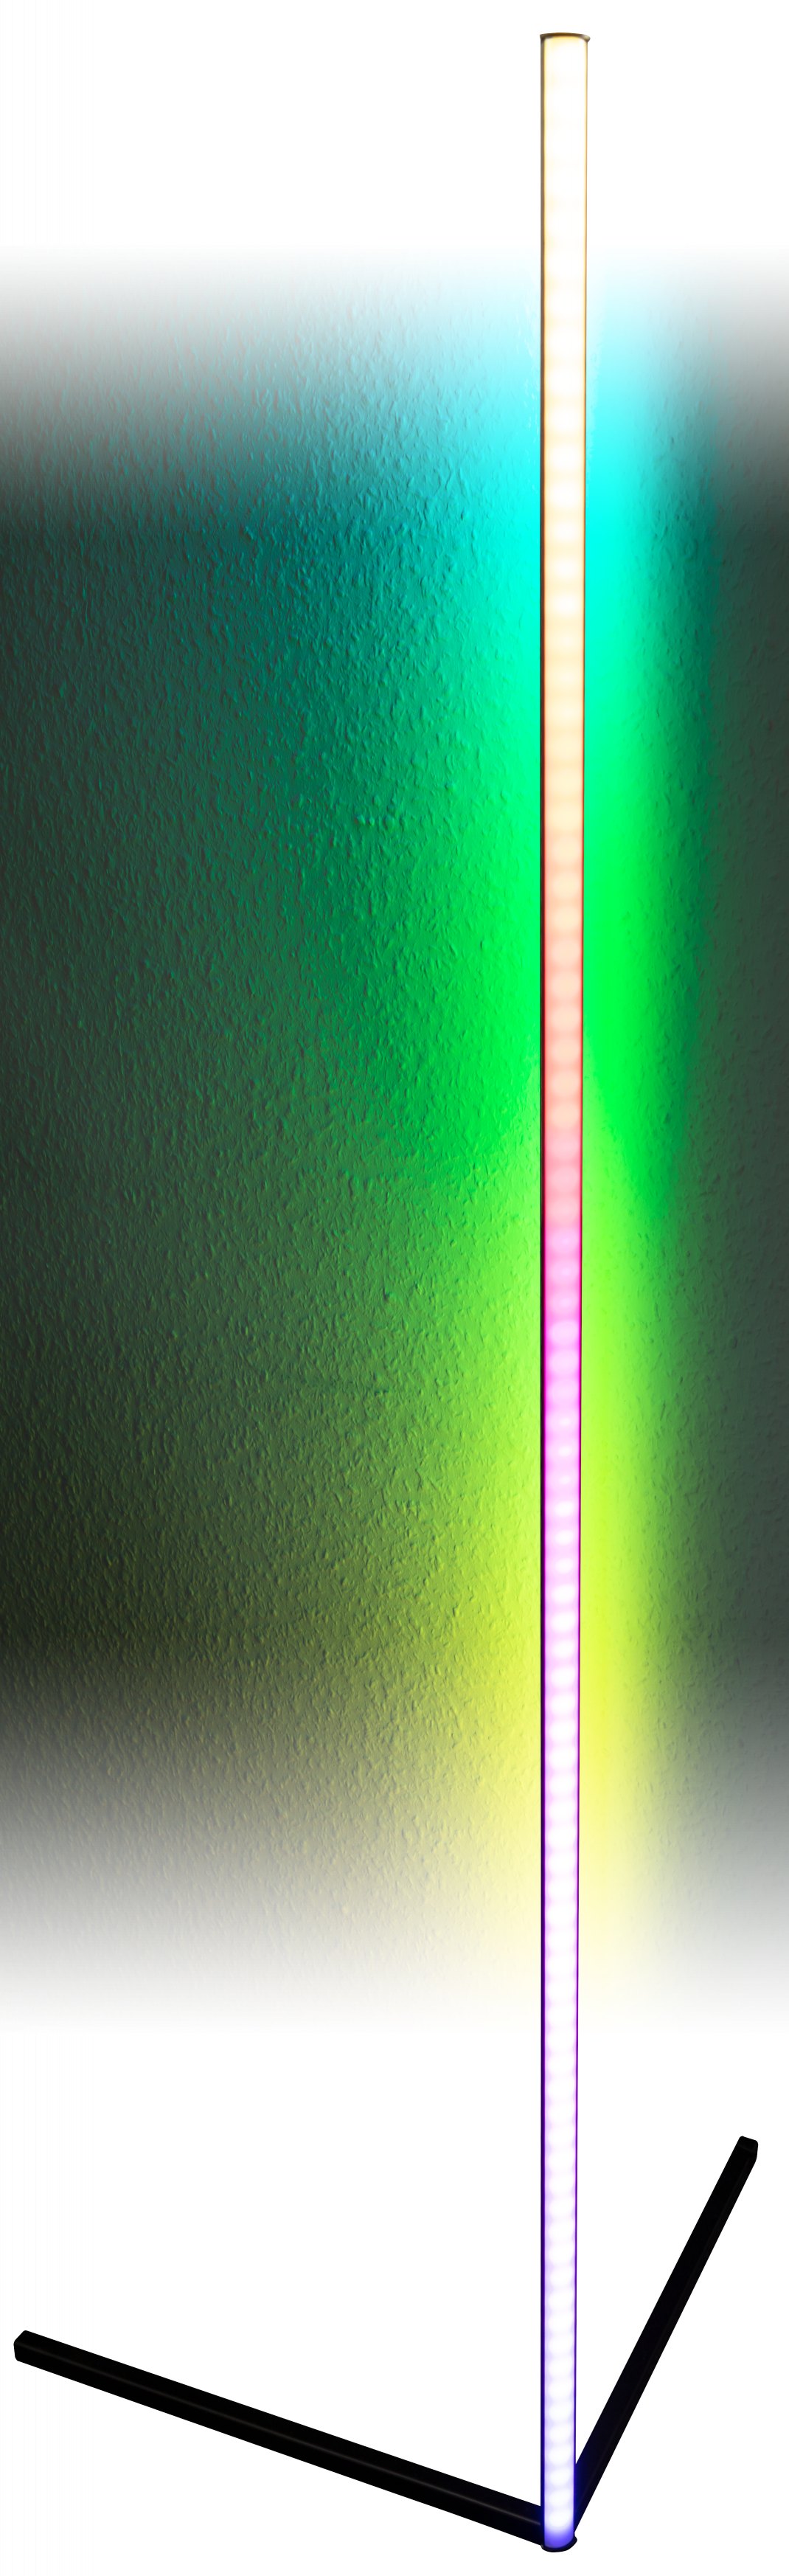 LED-Stehleuchte LEDeco SL-142 Höhe 142cm, RGB, Fernbedienung